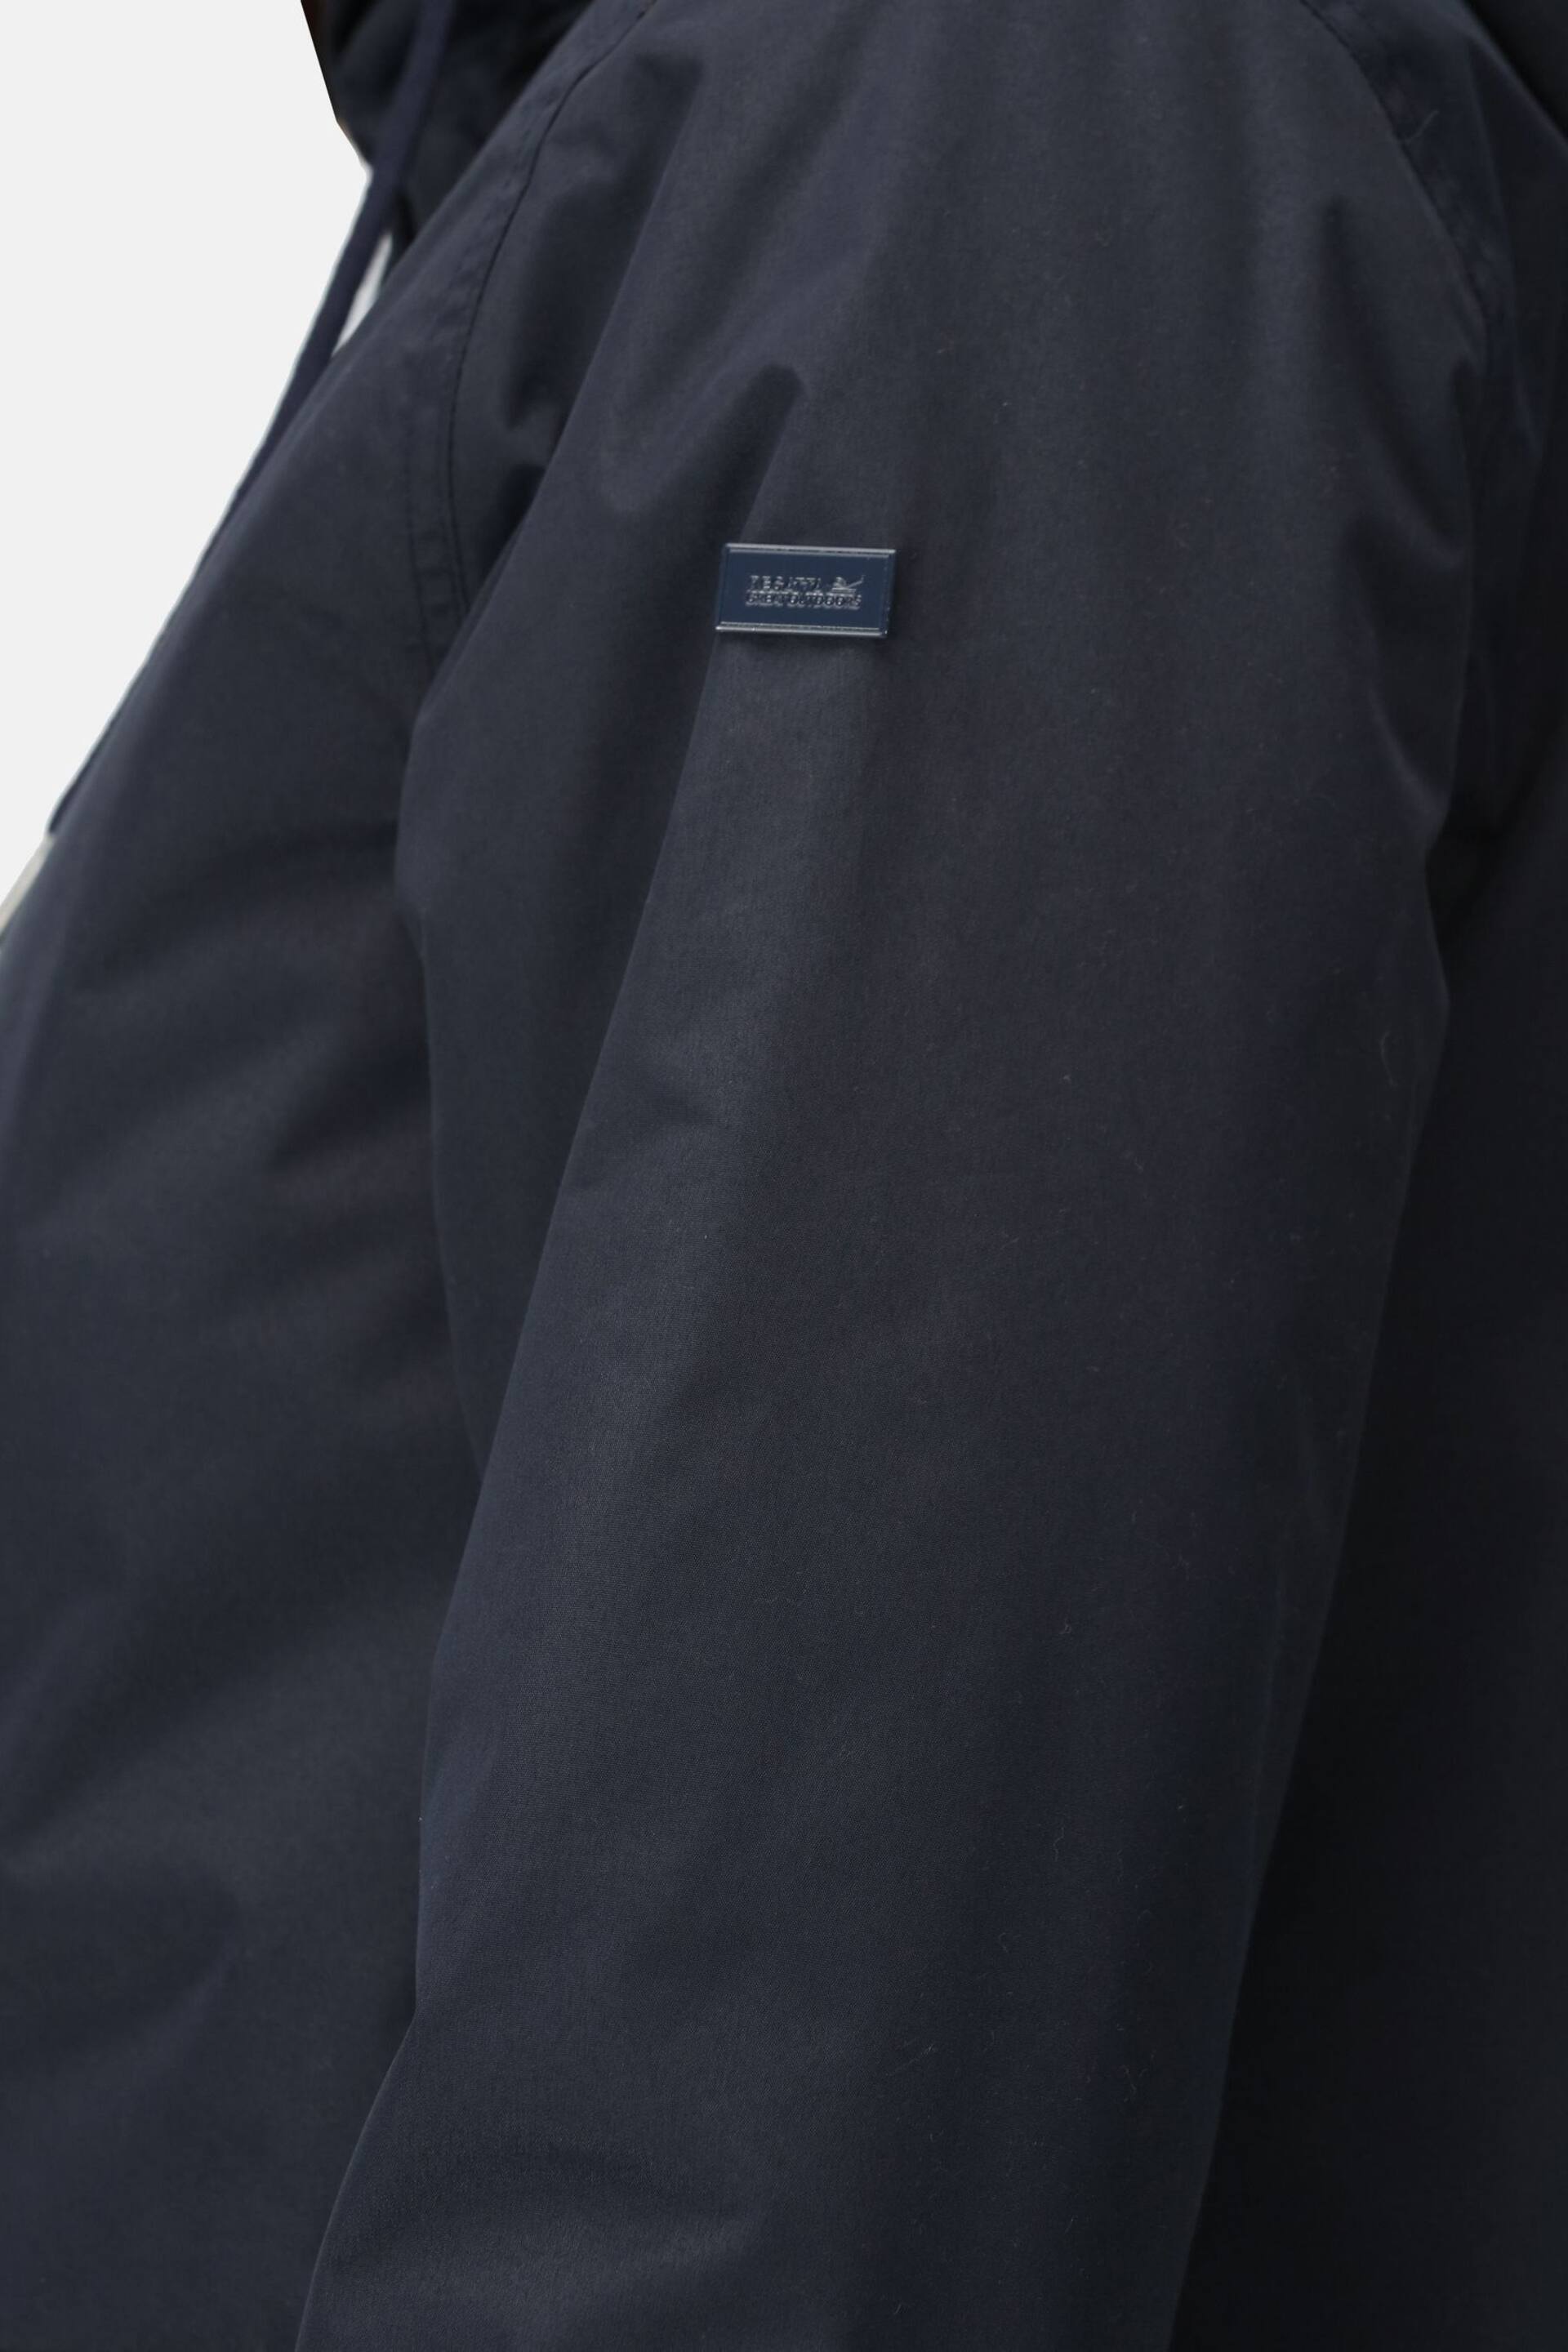 Regatta Navy Broadia Waterproof Thermal Insulated Jacket - Image 6 of 8